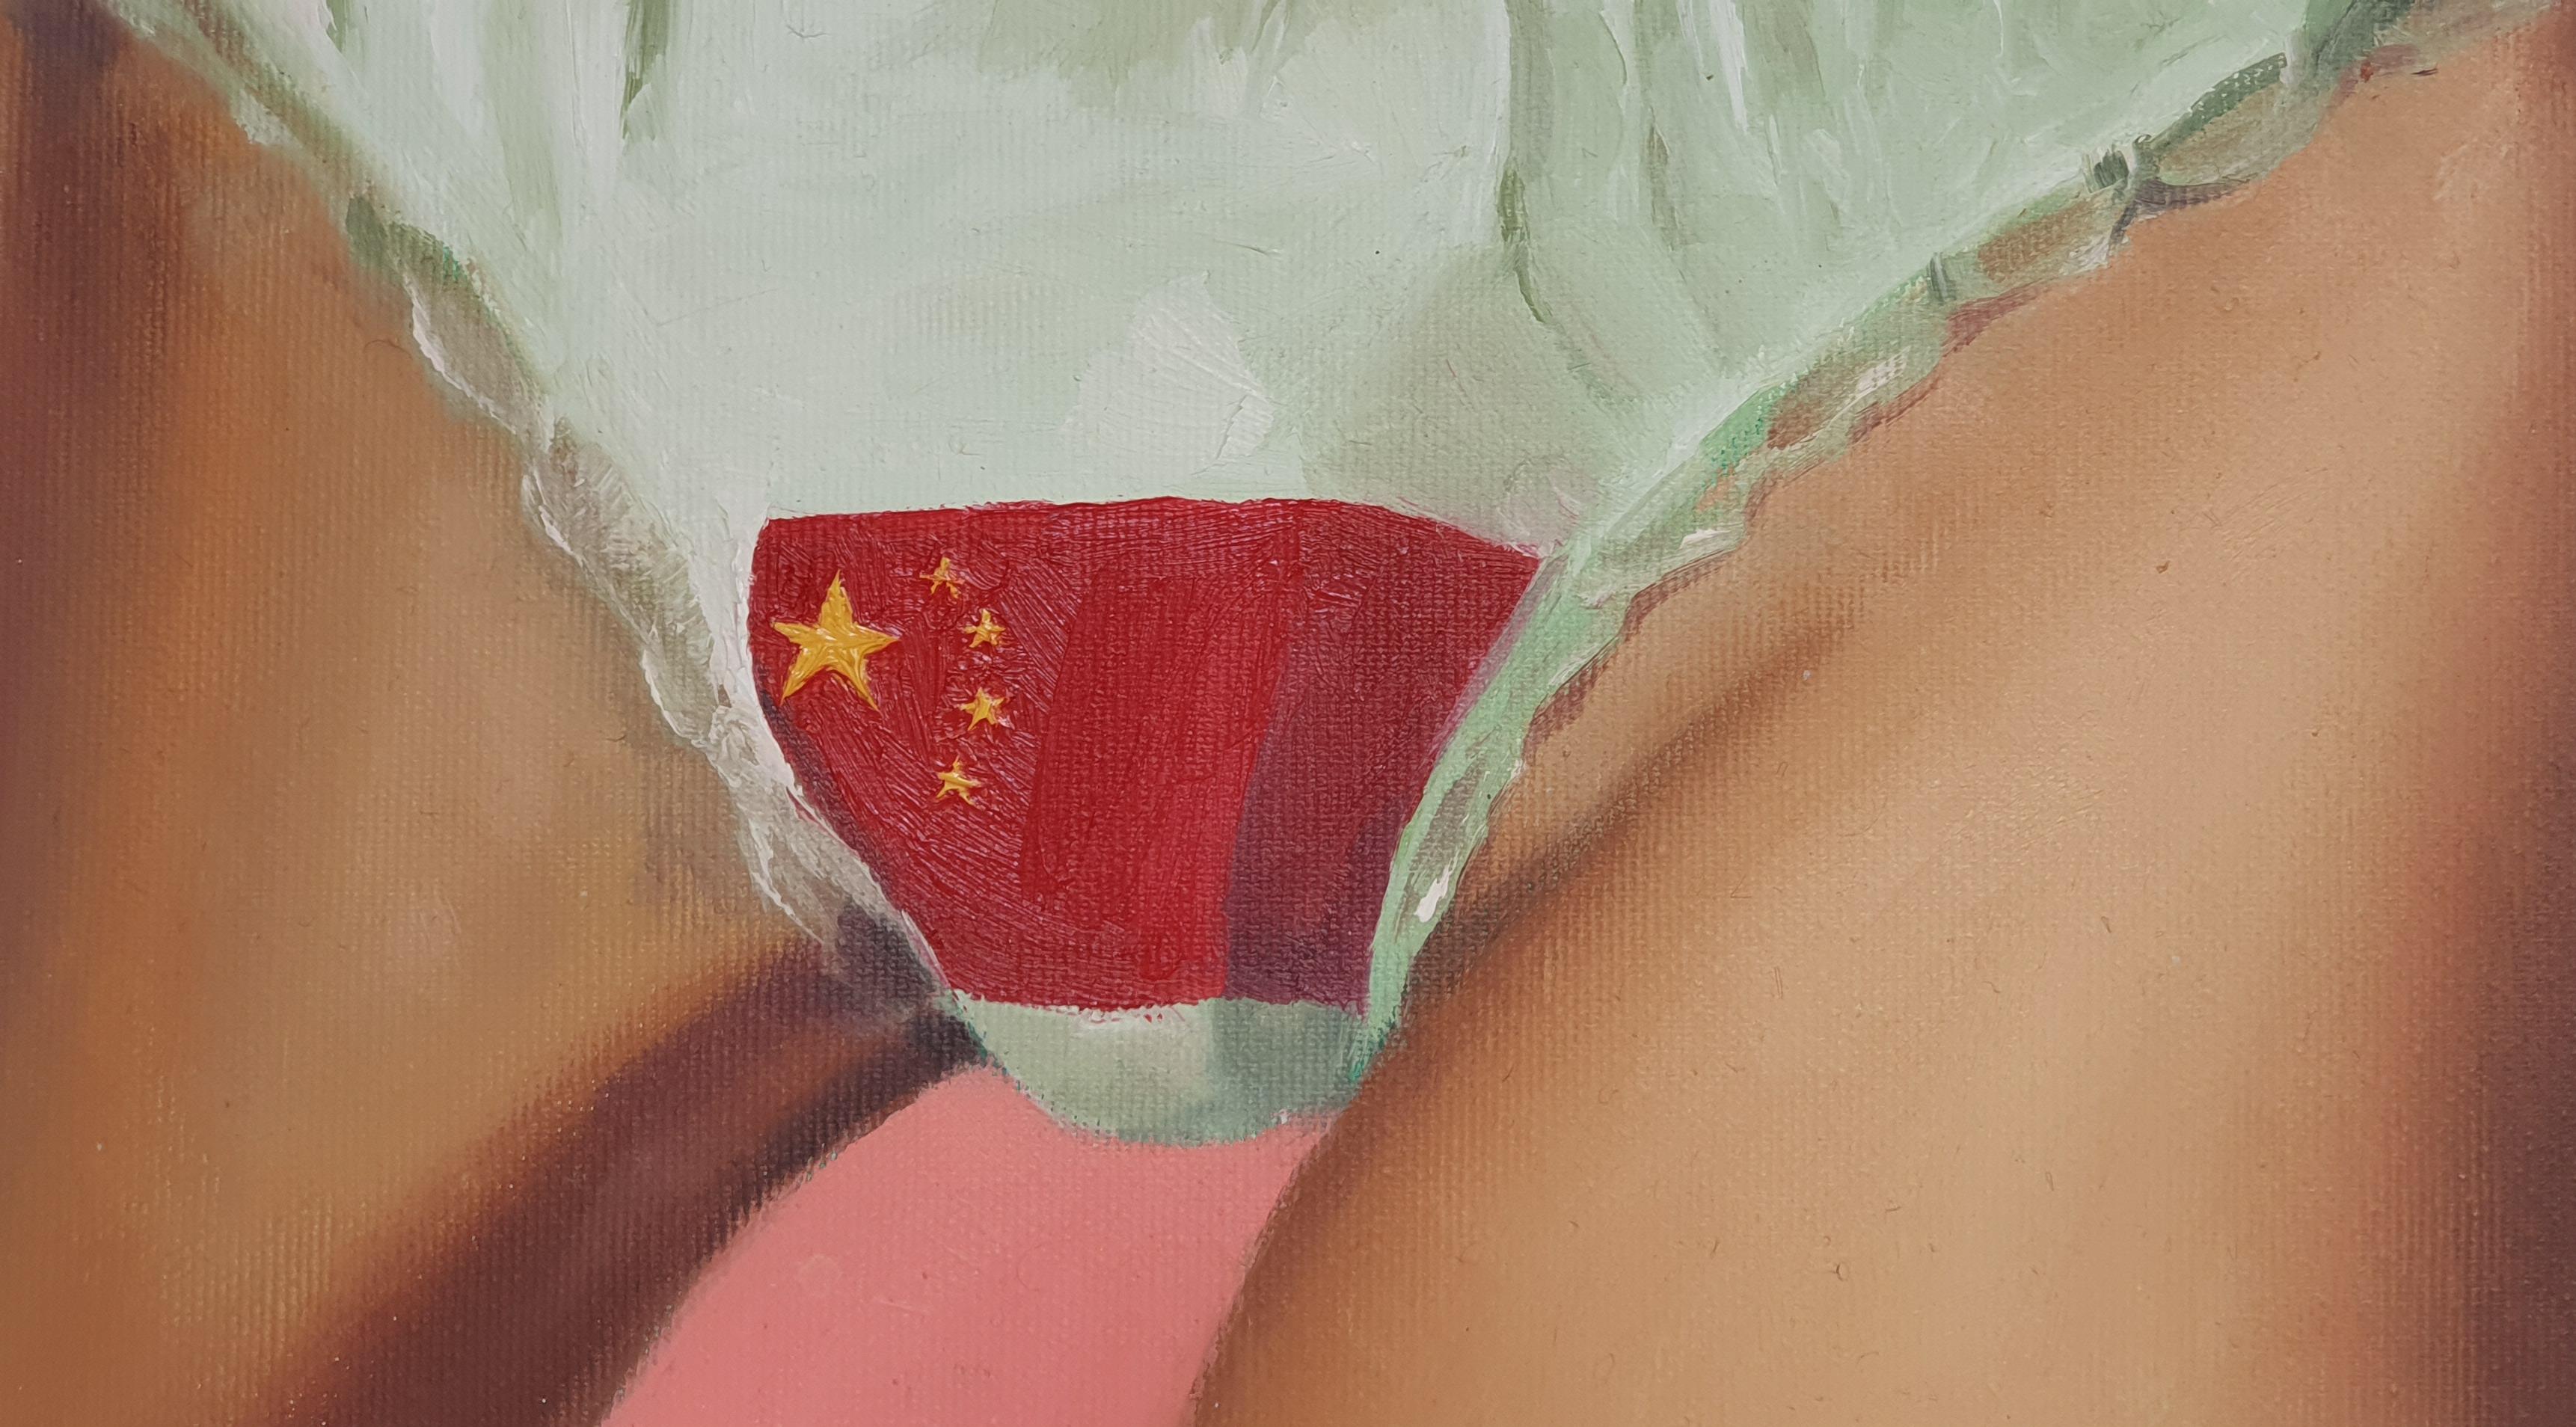 Chinesisches China – 21. Jahrhundert, Flagge, Rot, Rosa, Weiß, Große Wand Chinas, Pagode (Fotorealismus), Painting, von Mihai Florea